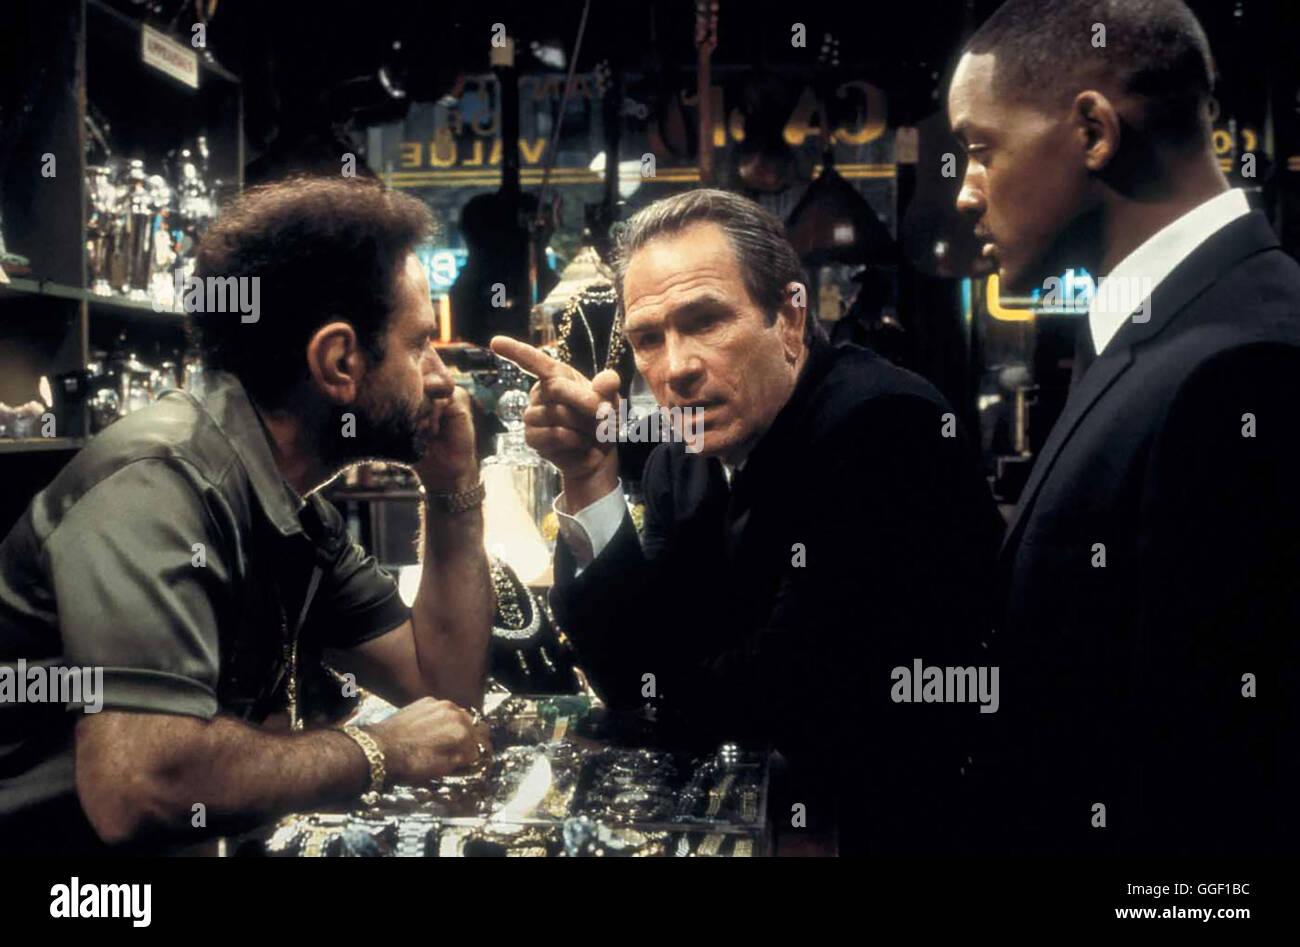 MEN IN BLACK 2 / Men In Black 2 USA 2002 / Barry Sonnenfeld Szene Mit Agent K (TOMMY LEE JONES) Und Agent J (WILL SMITH). Regie: Barry Sonnenfeld aka. Men In Black 2 Stockfoto